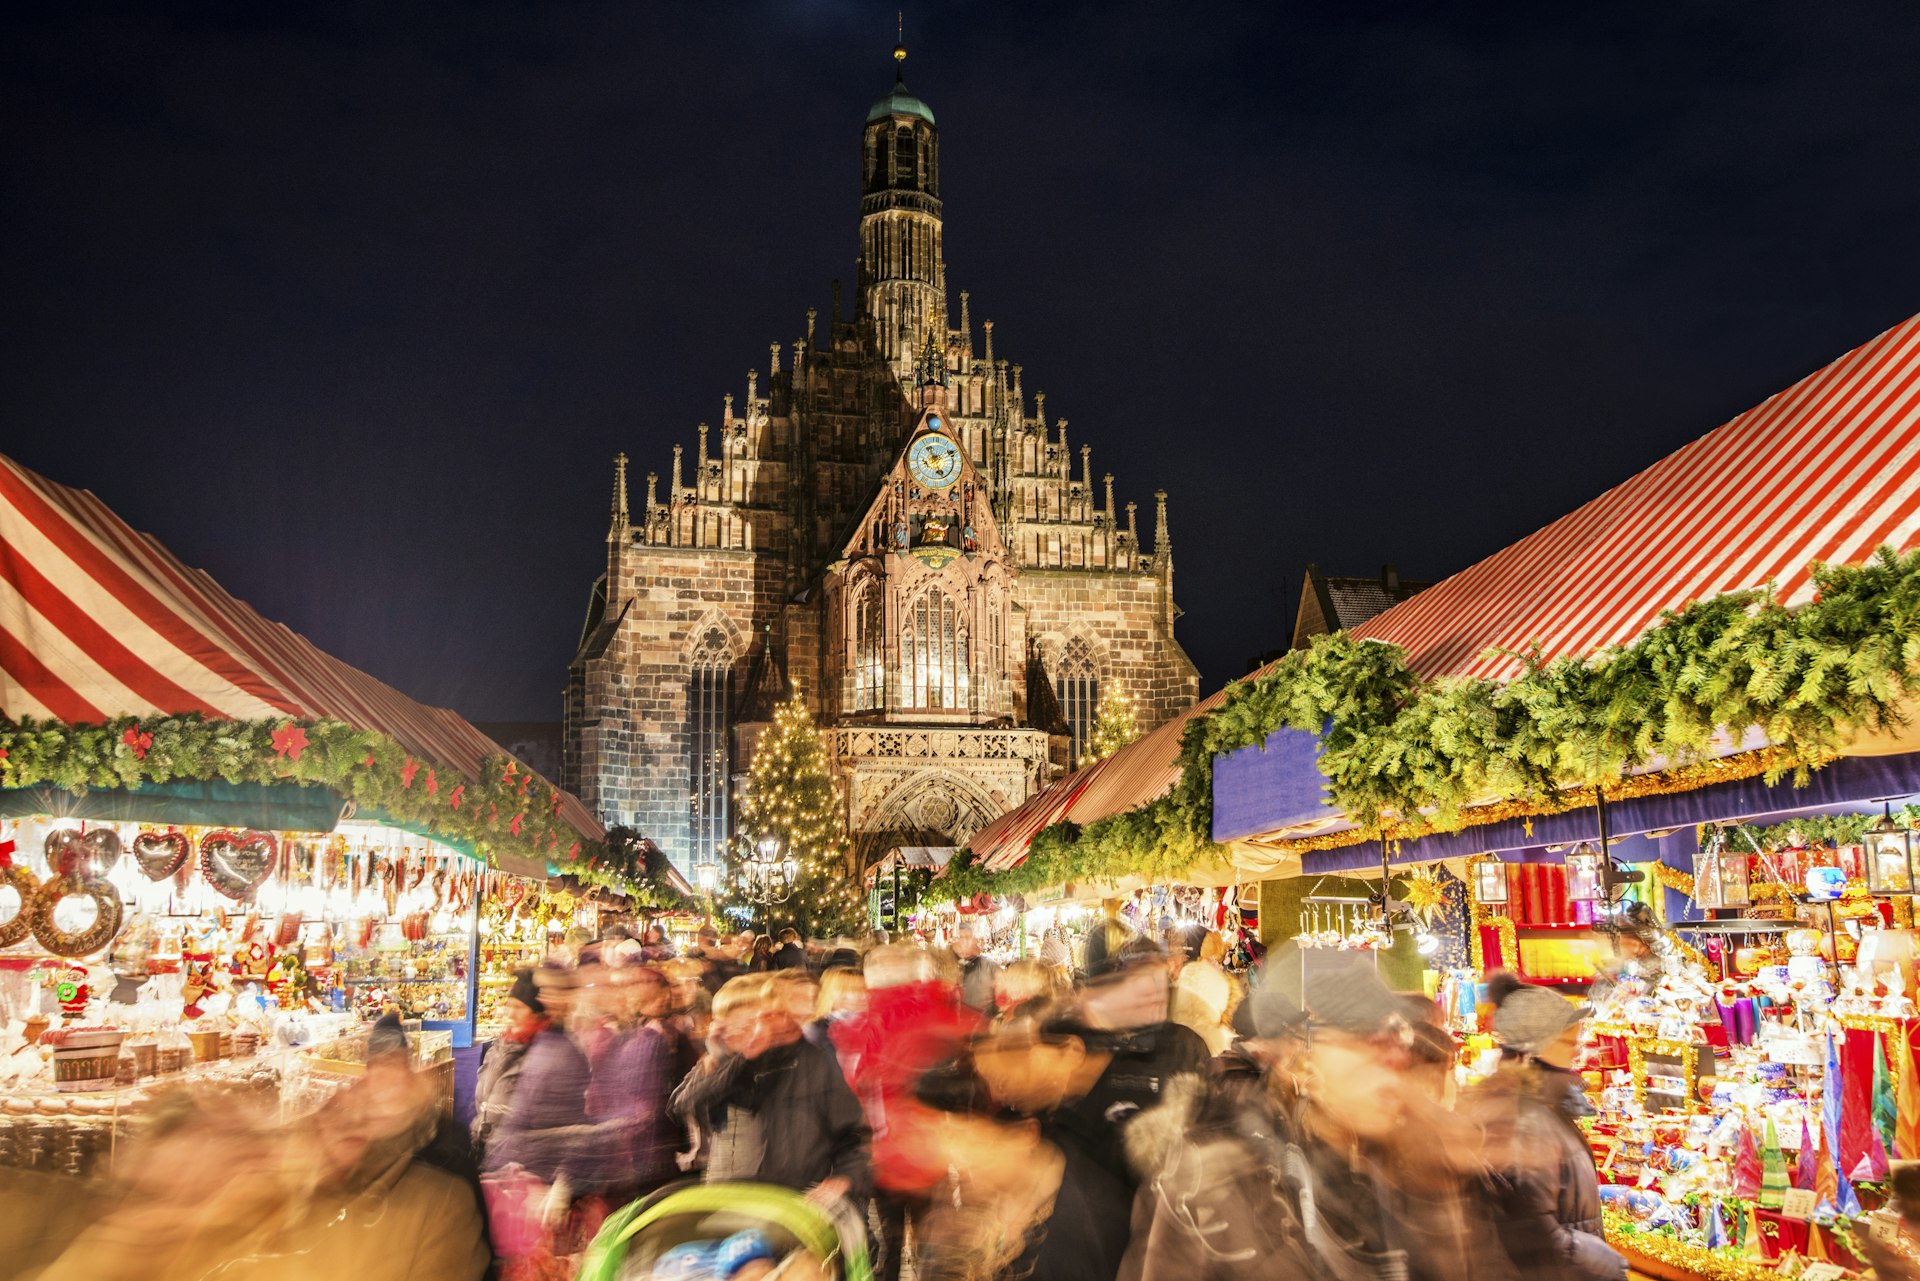 People walking through stalls at the Christmas Market in Nuremberg, Germany